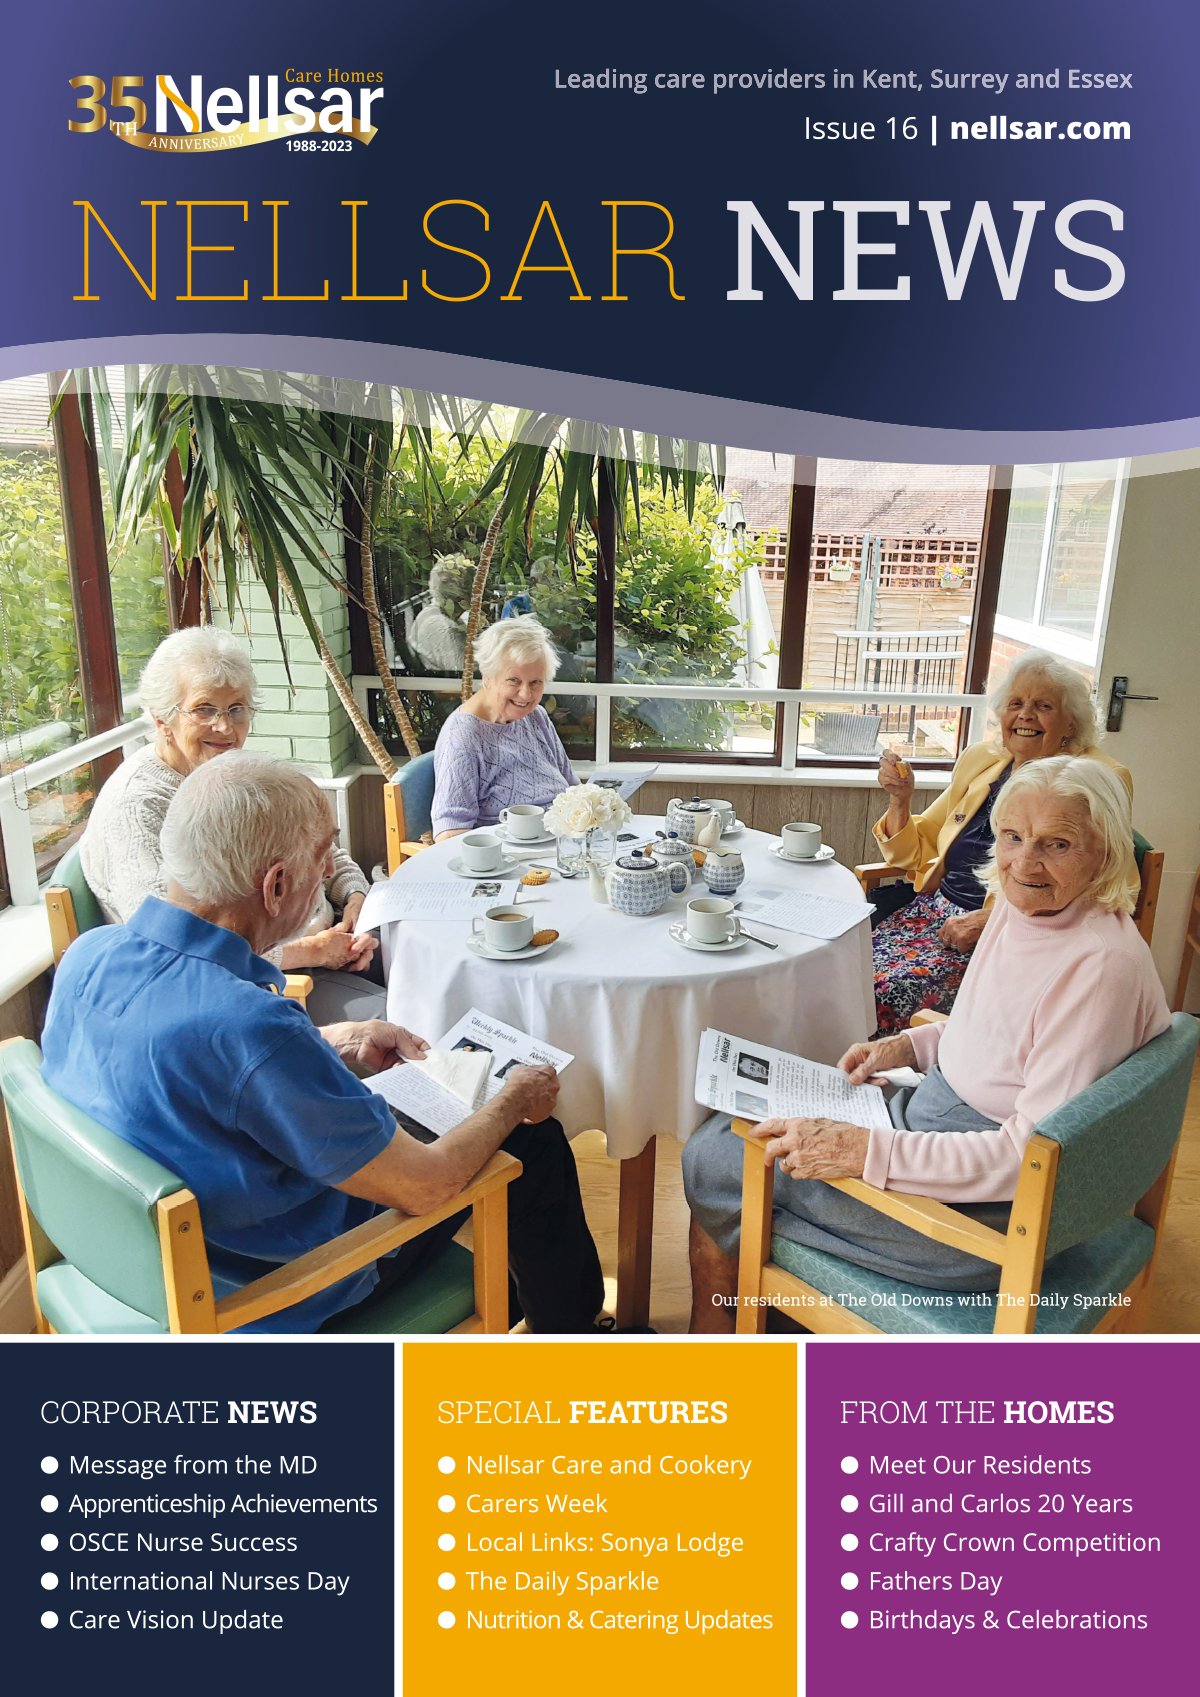 Nellsar News Issue 16 